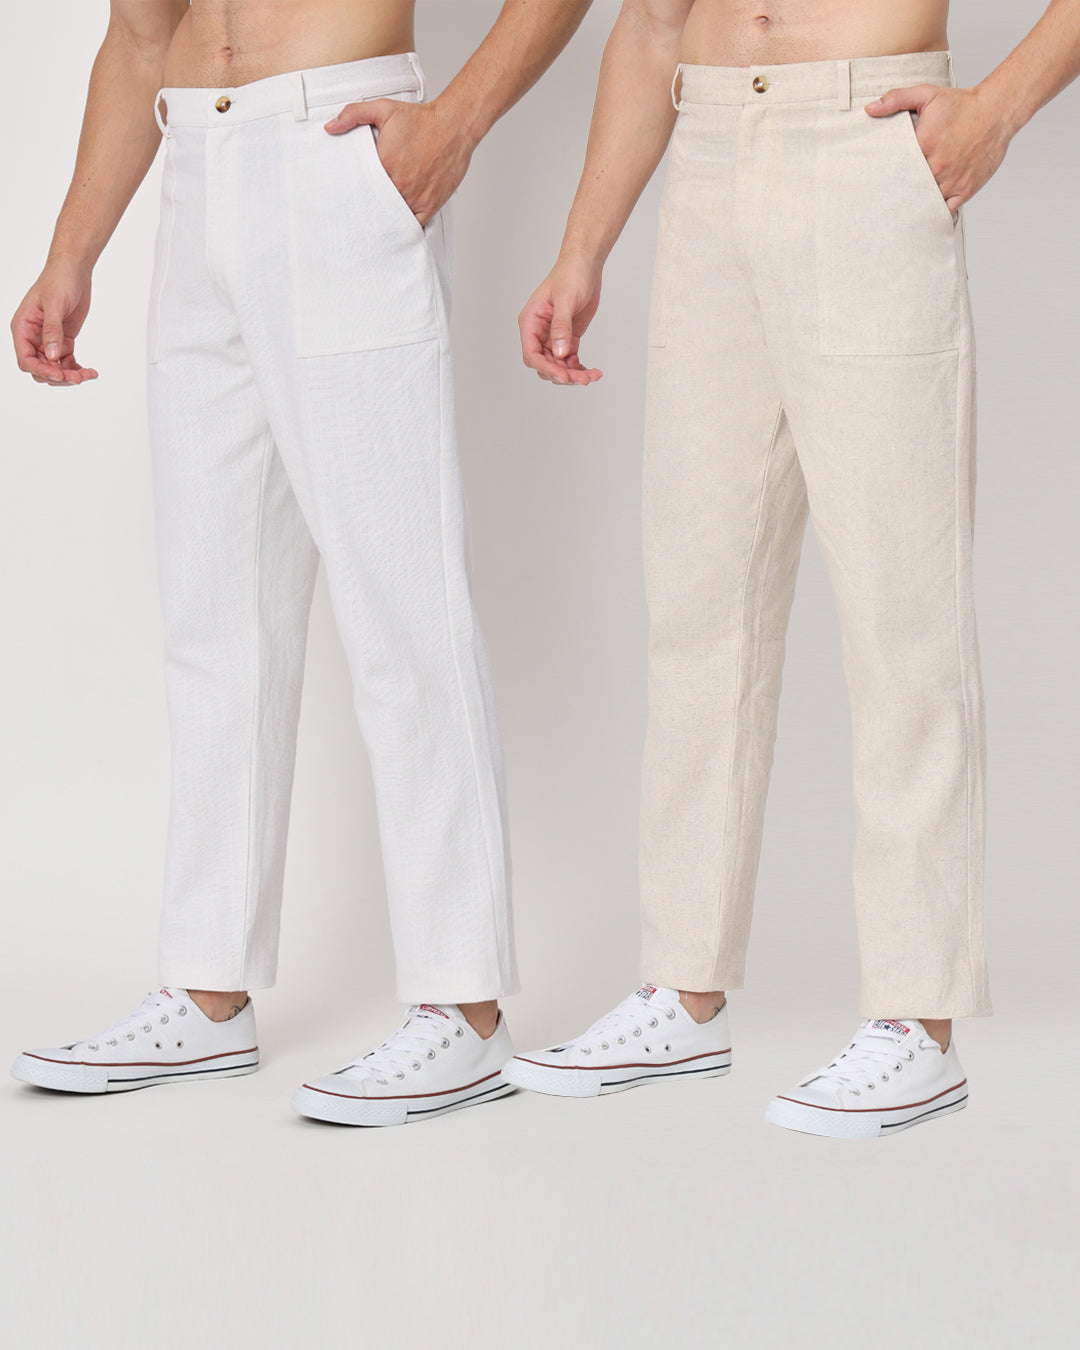 Combo : Comfy Ease Beige & White Men's Pants - Set of 2